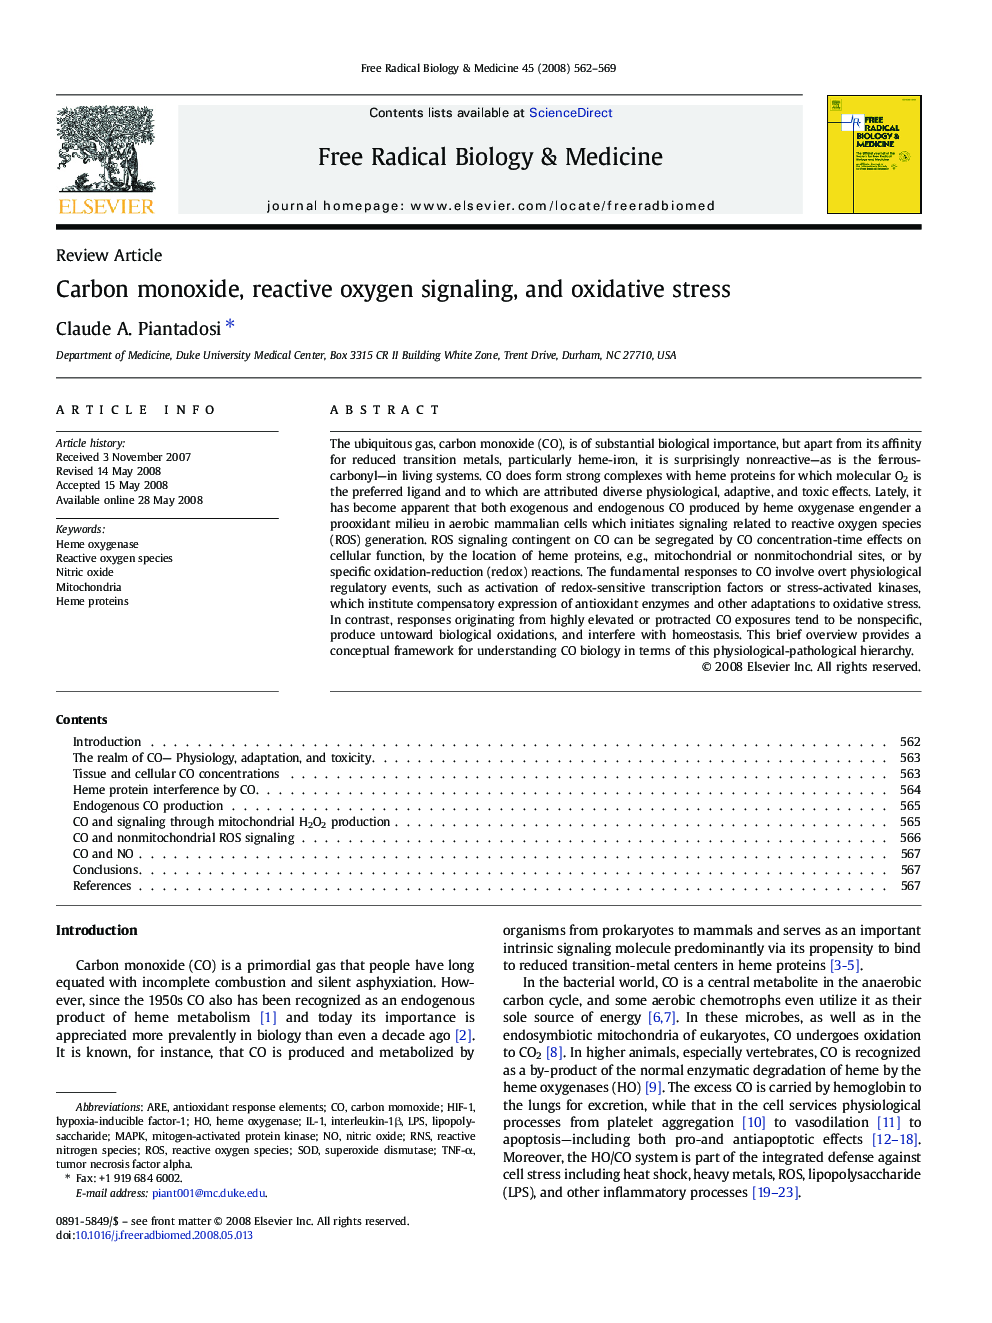 Carbon monoxide, reactive oxygen signaling, and oxidative stress